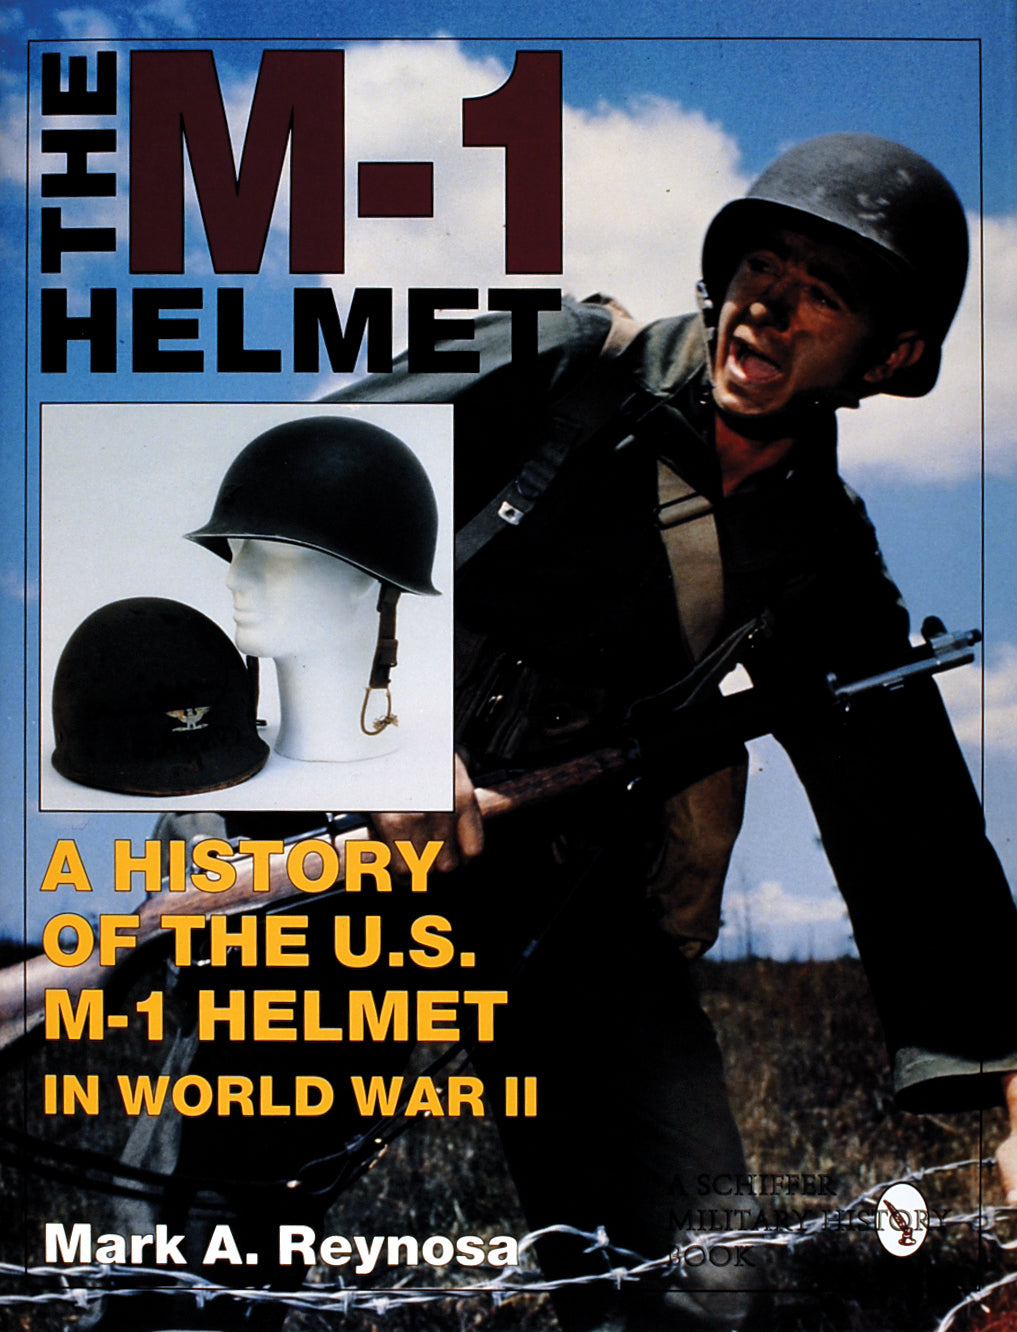 The M-1 Helmet